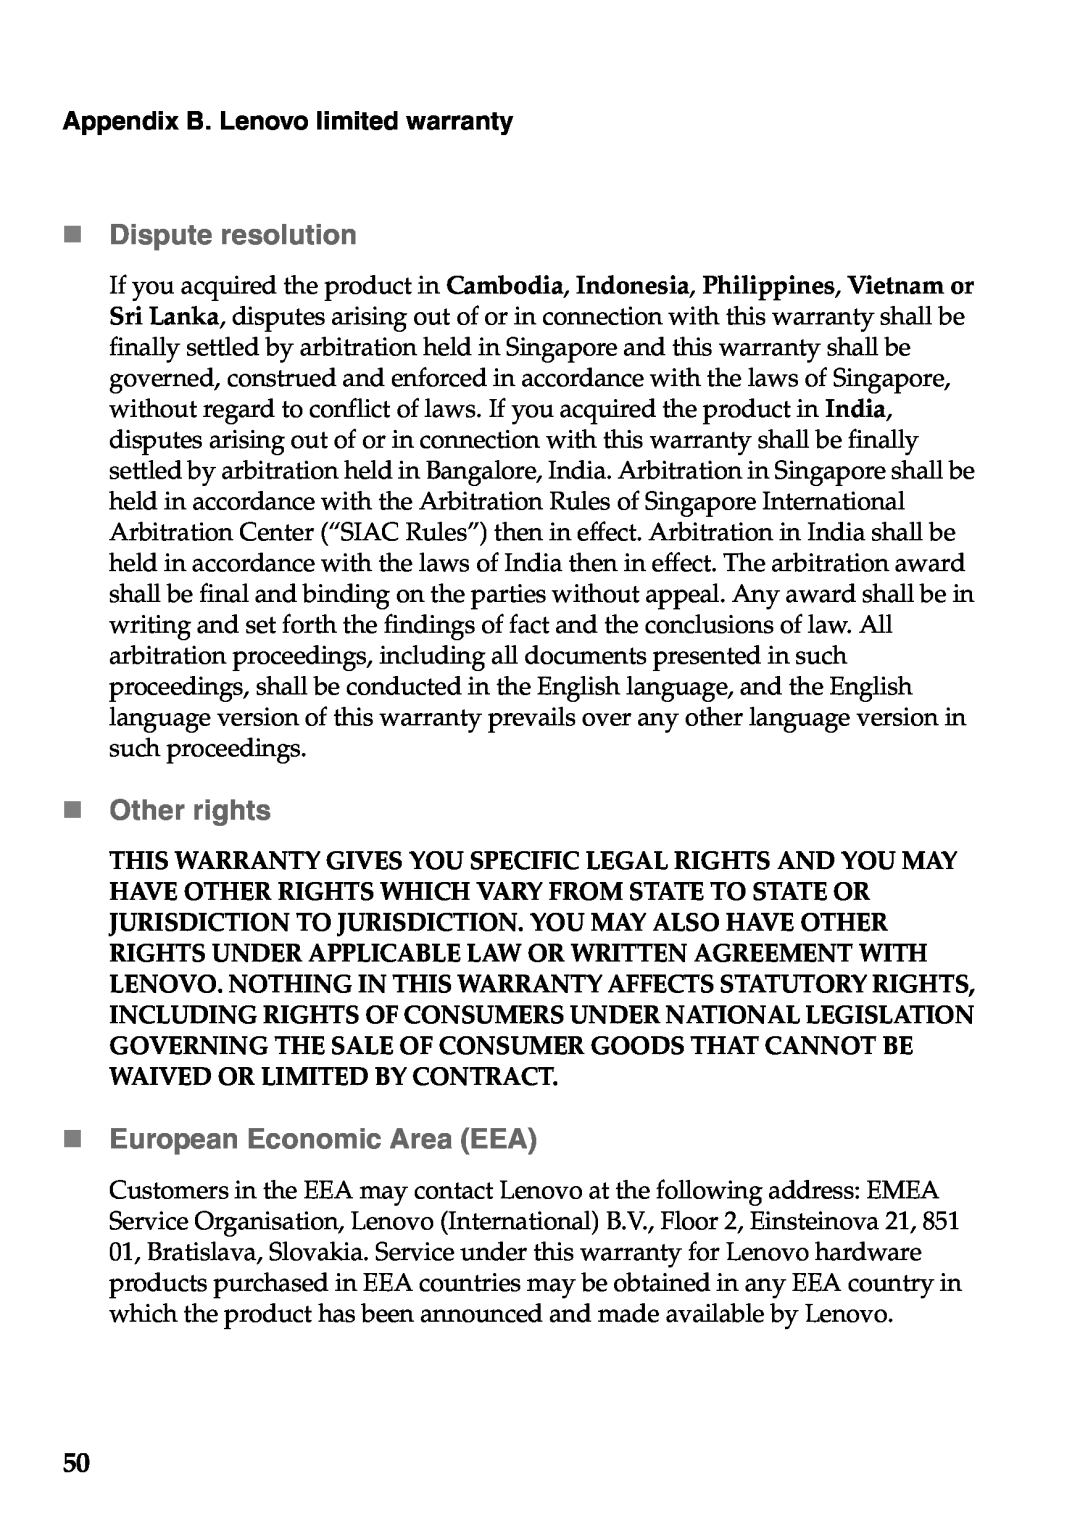 Lenovo G565, G465 manual „ Dispute resolution, „ Other rights, „ European Economic Area EEA 